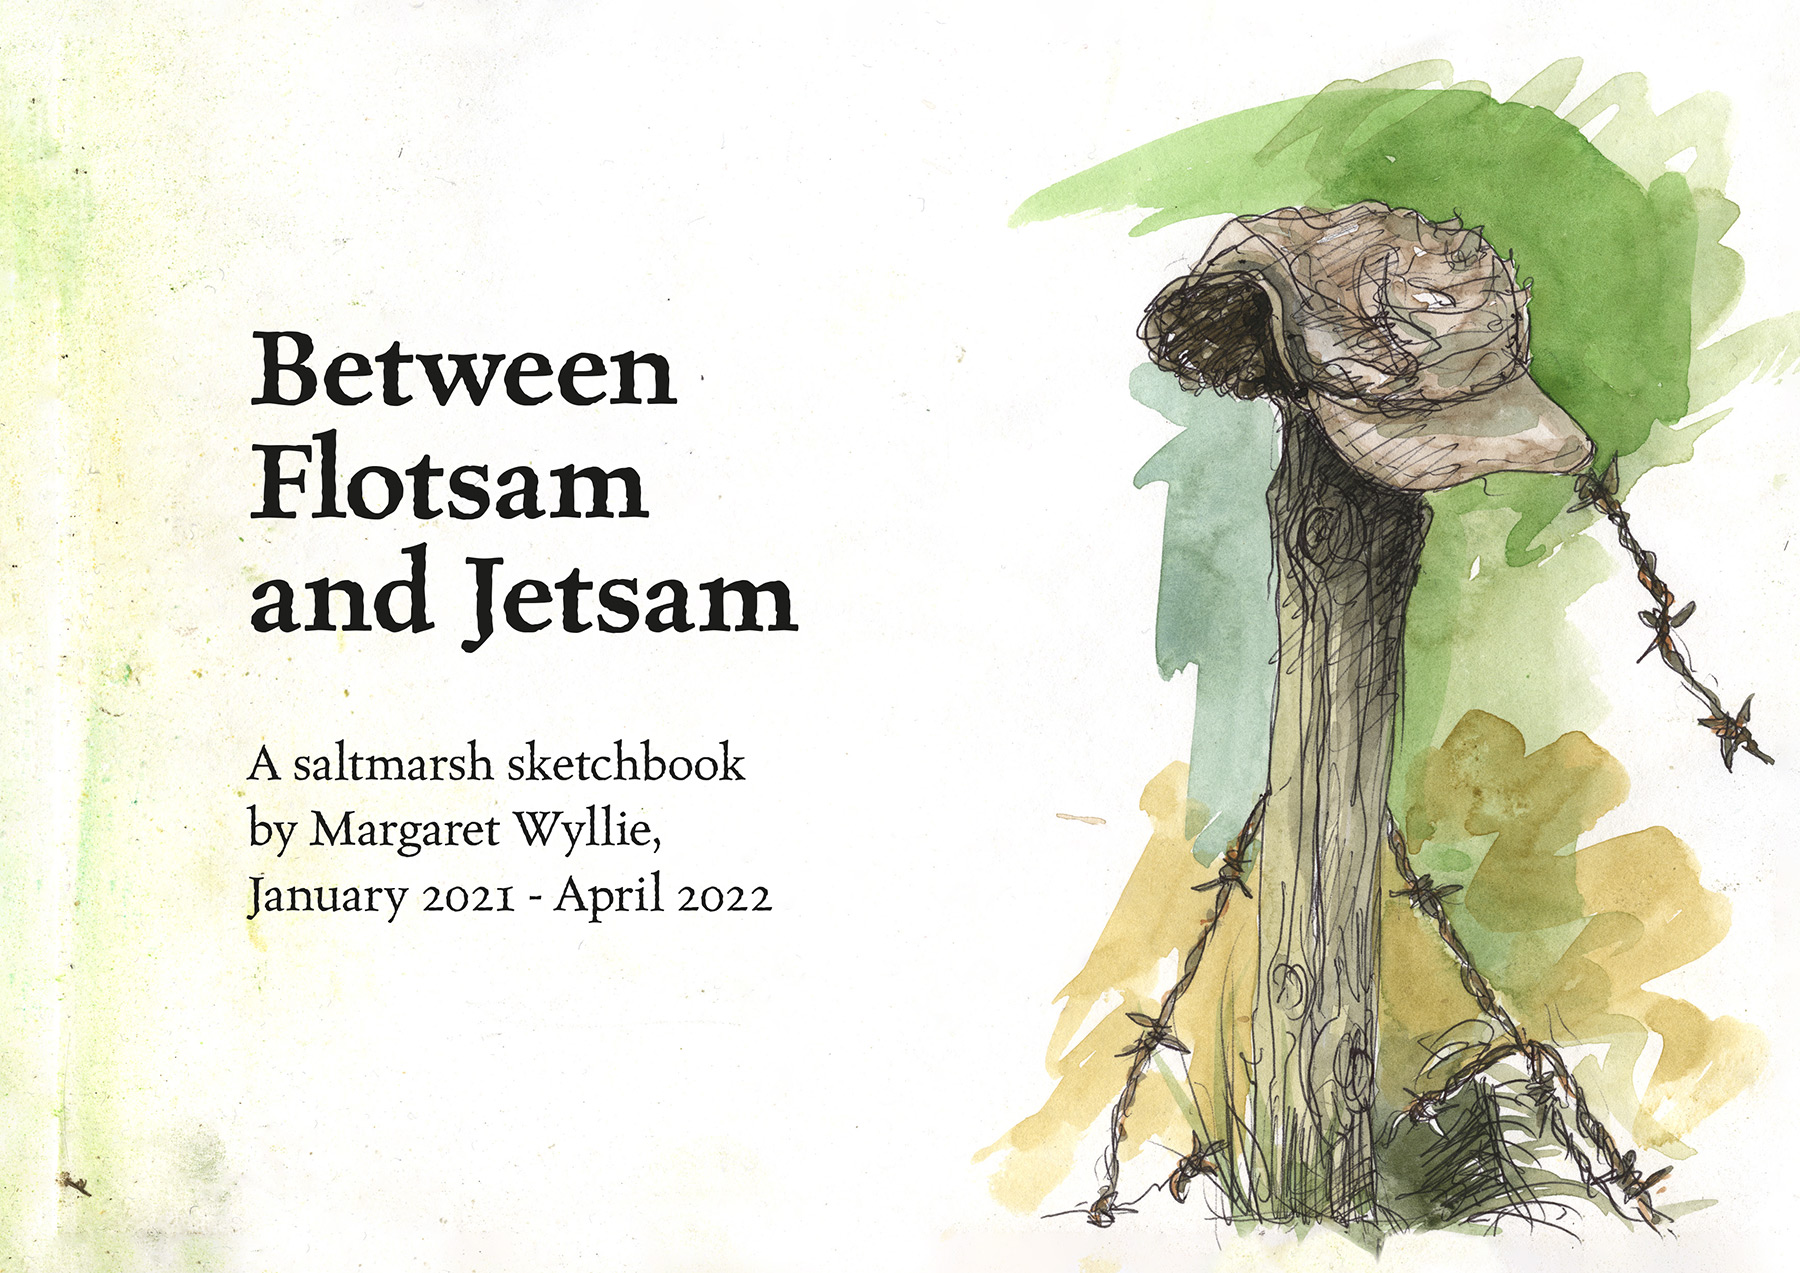 Between Flotsam and Jetsam by Margaret Wyllie